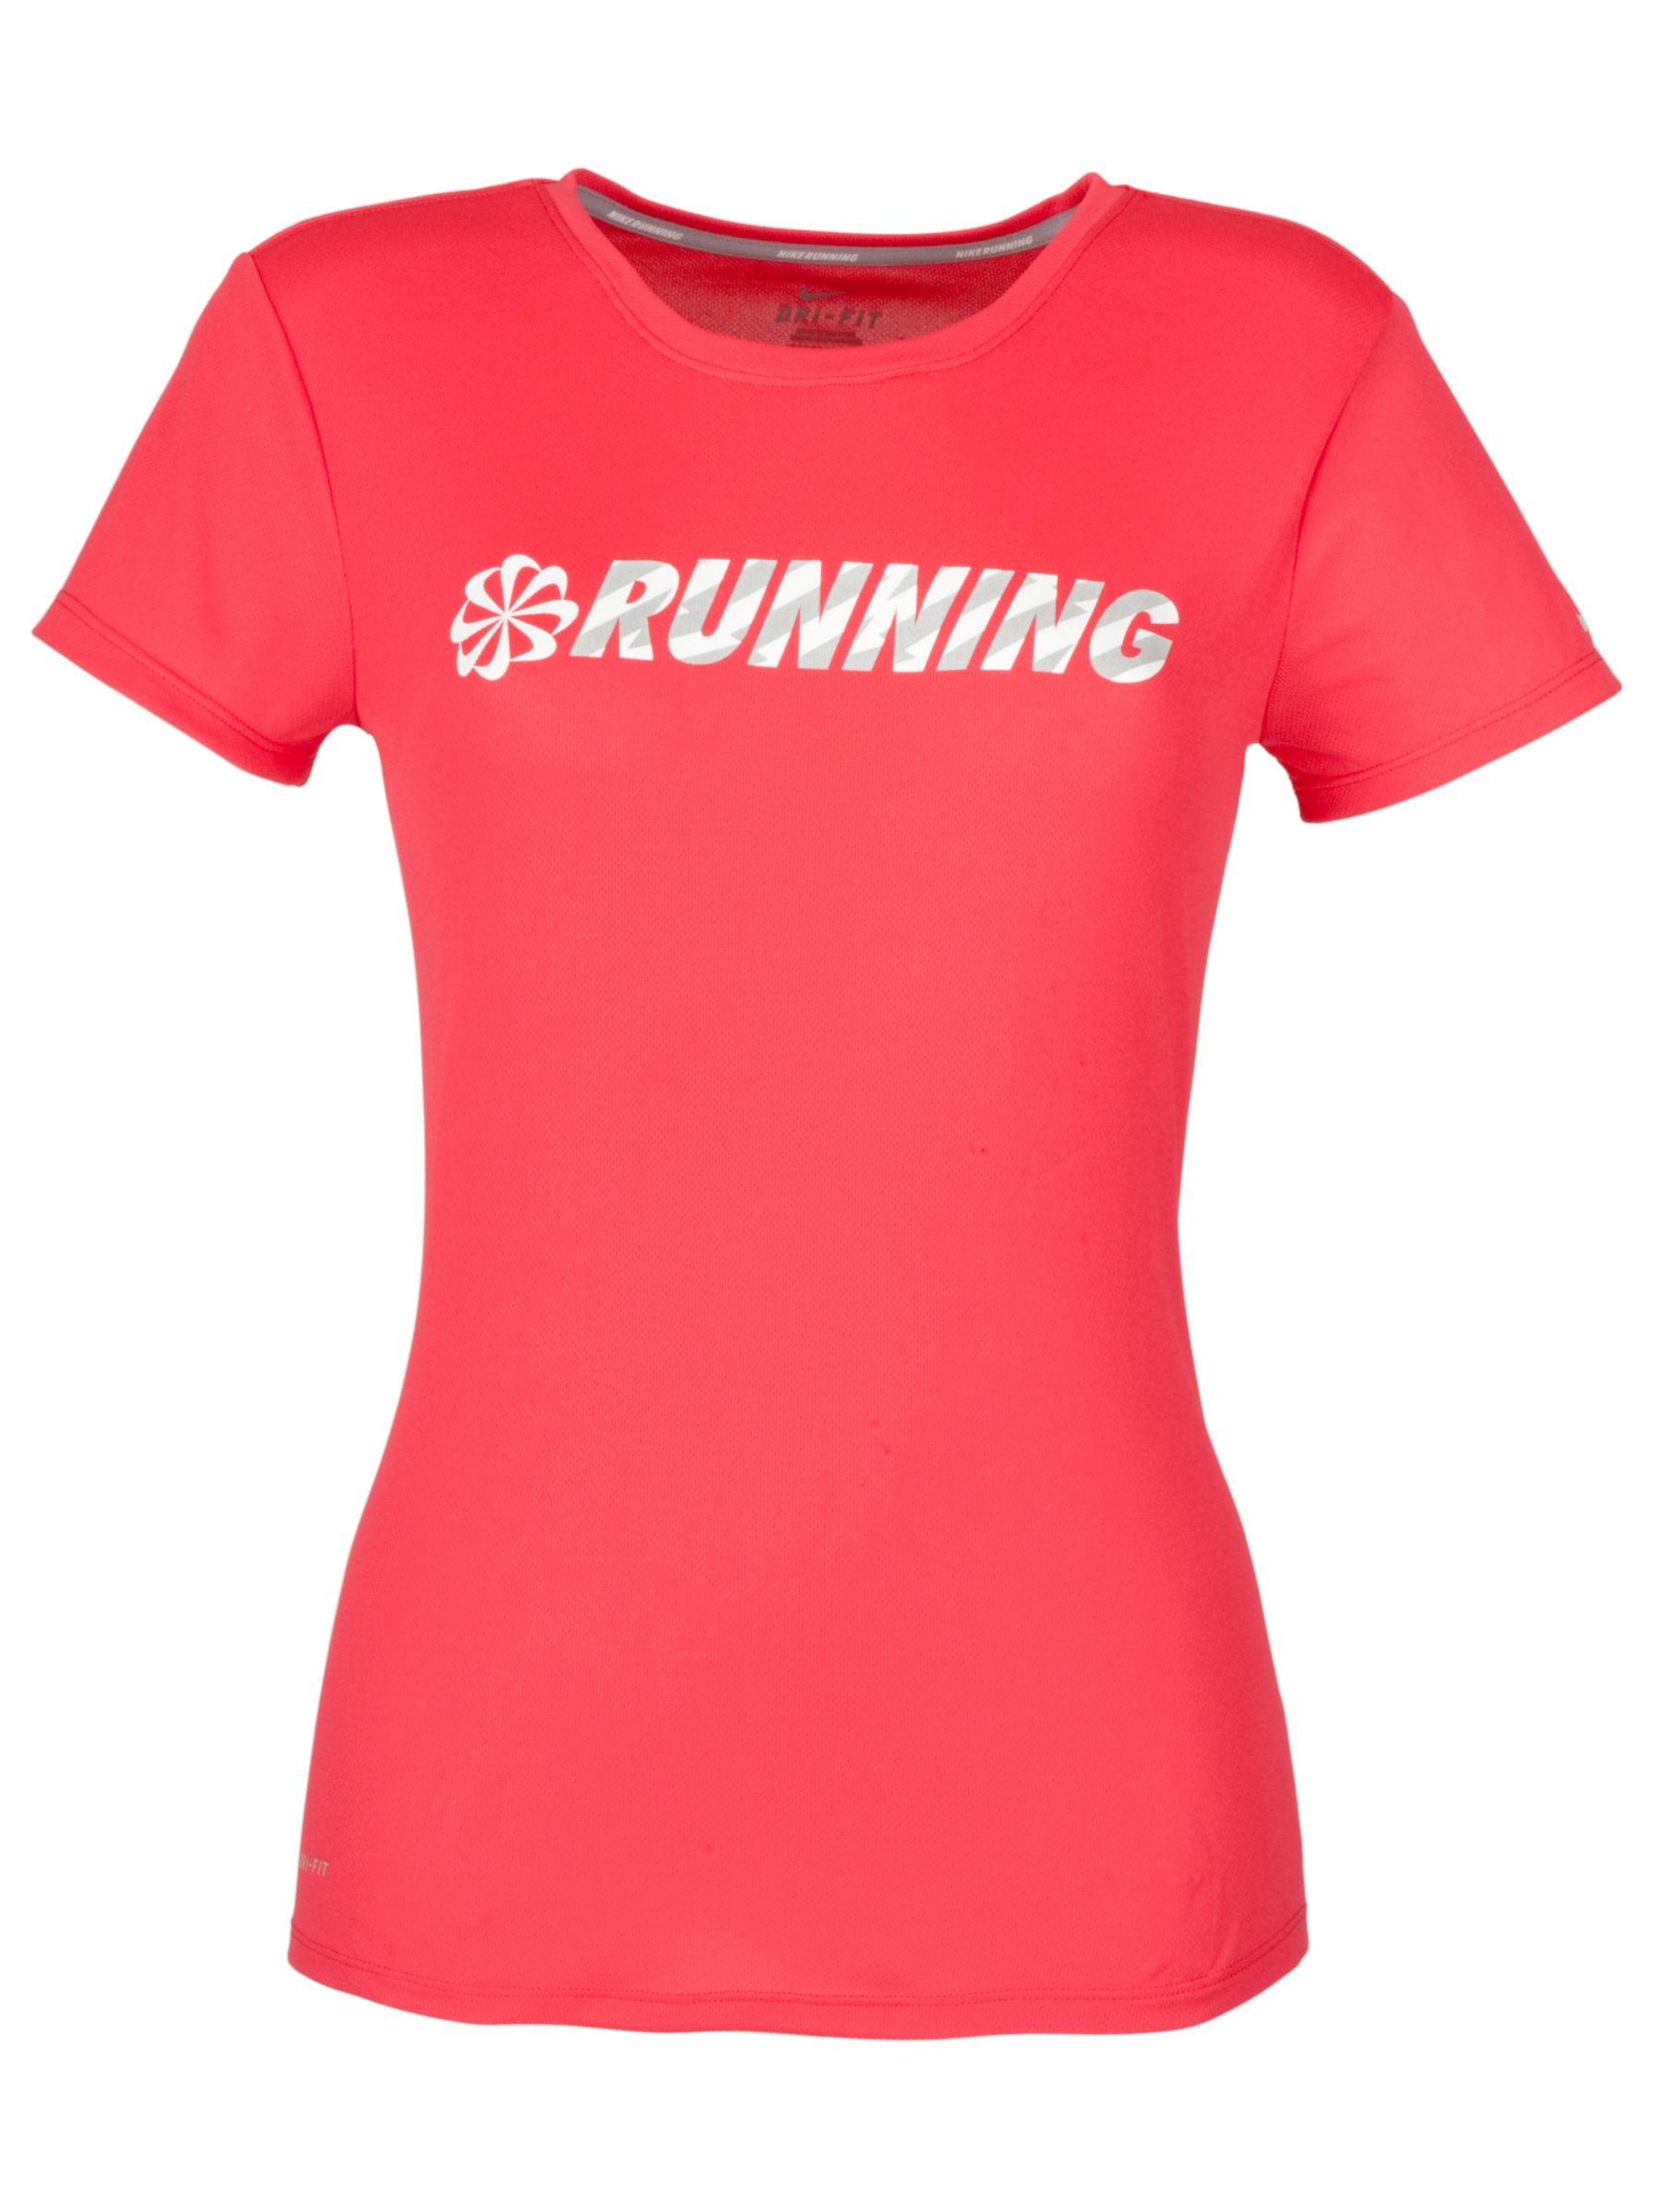 Nike Challenger Run Graphic T-Shirt, Scarlet Fire